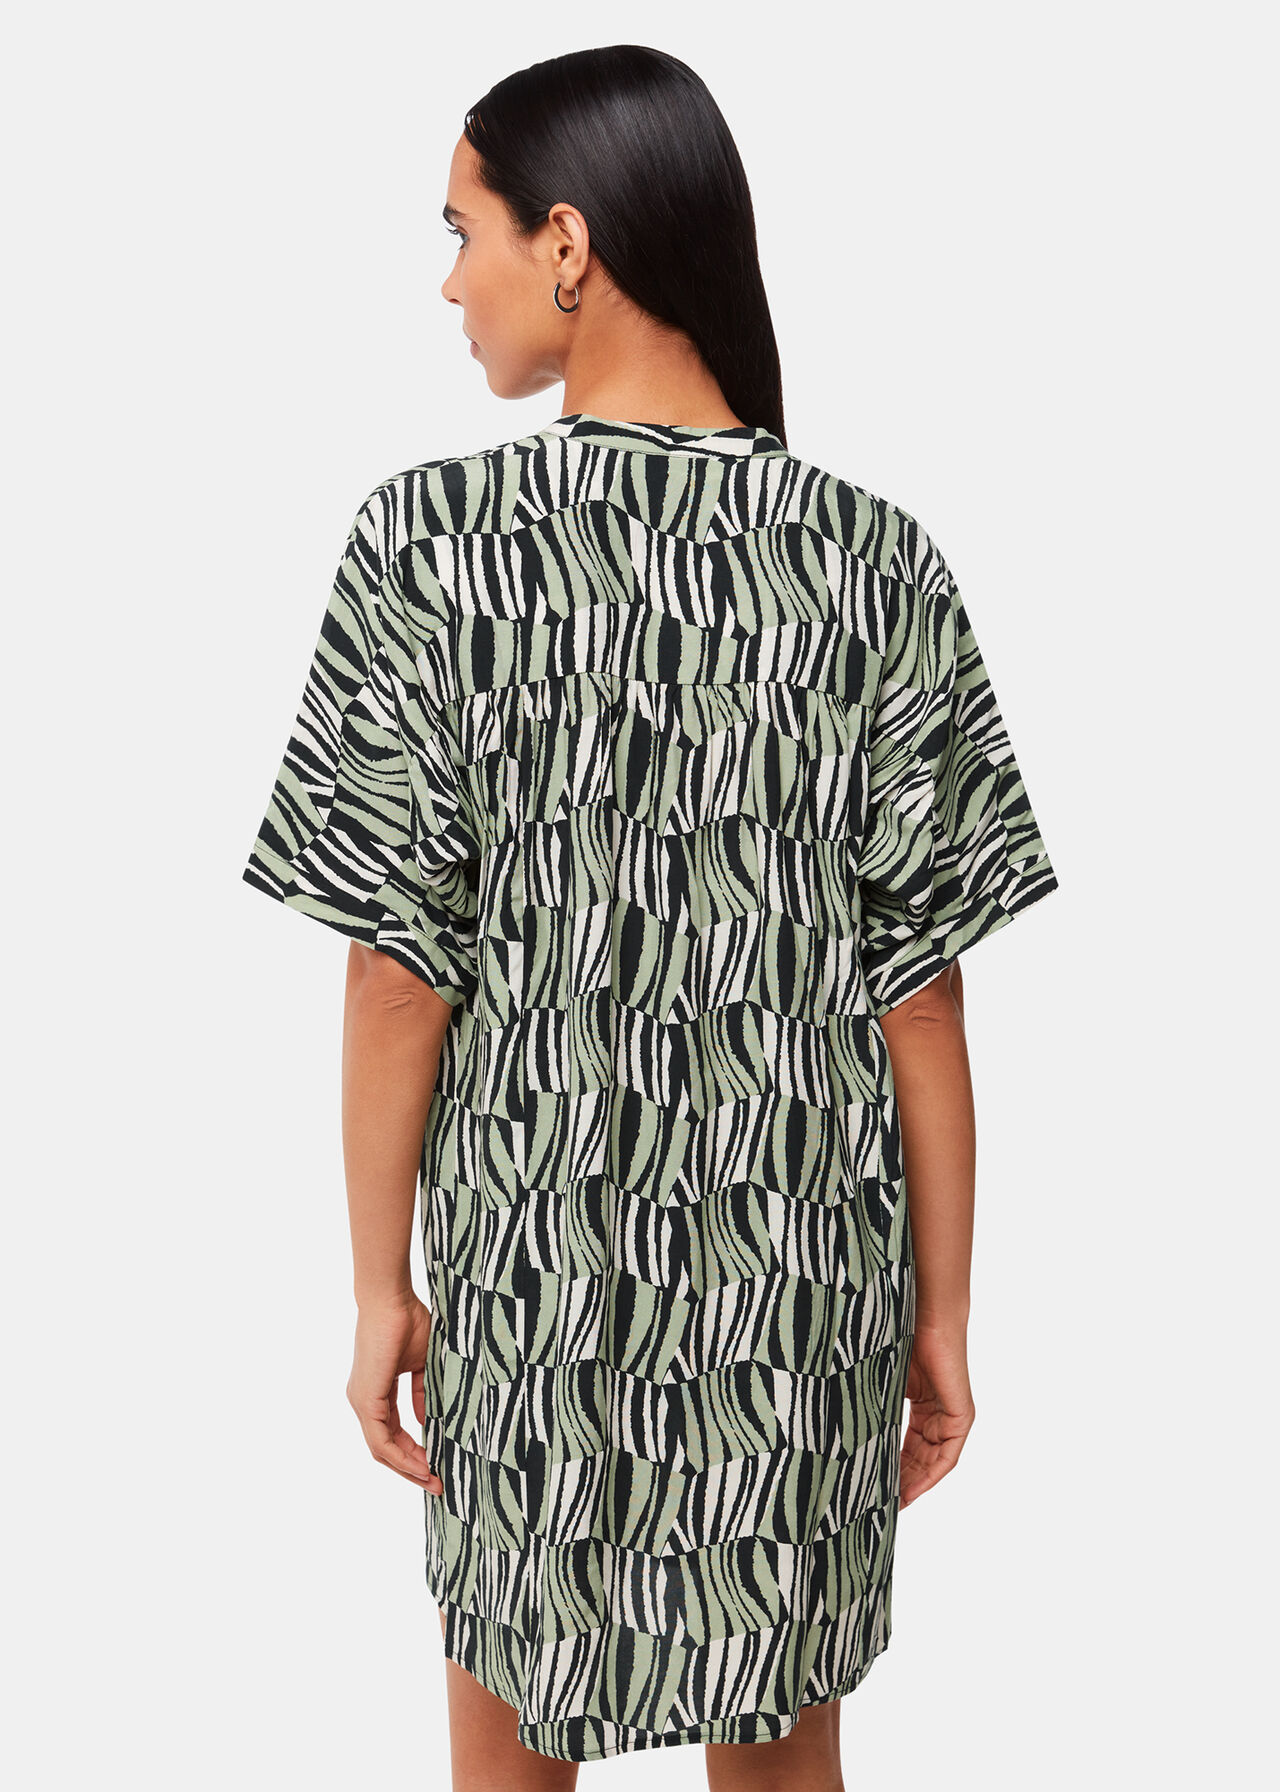 Checkerboard Tiger Print Dress